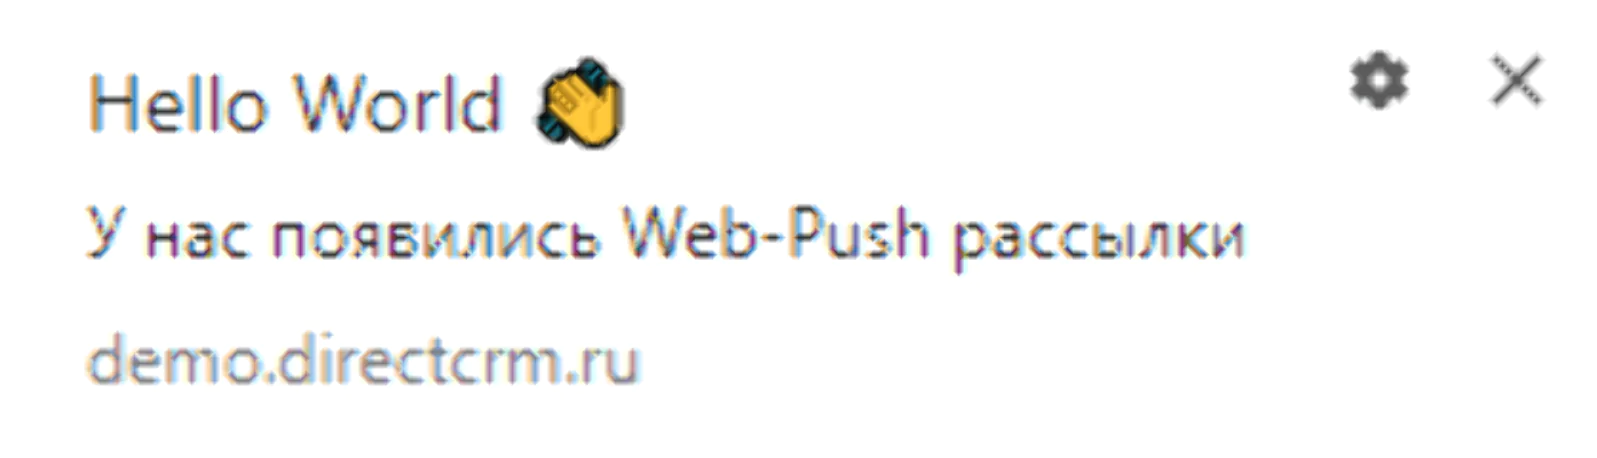 web-push